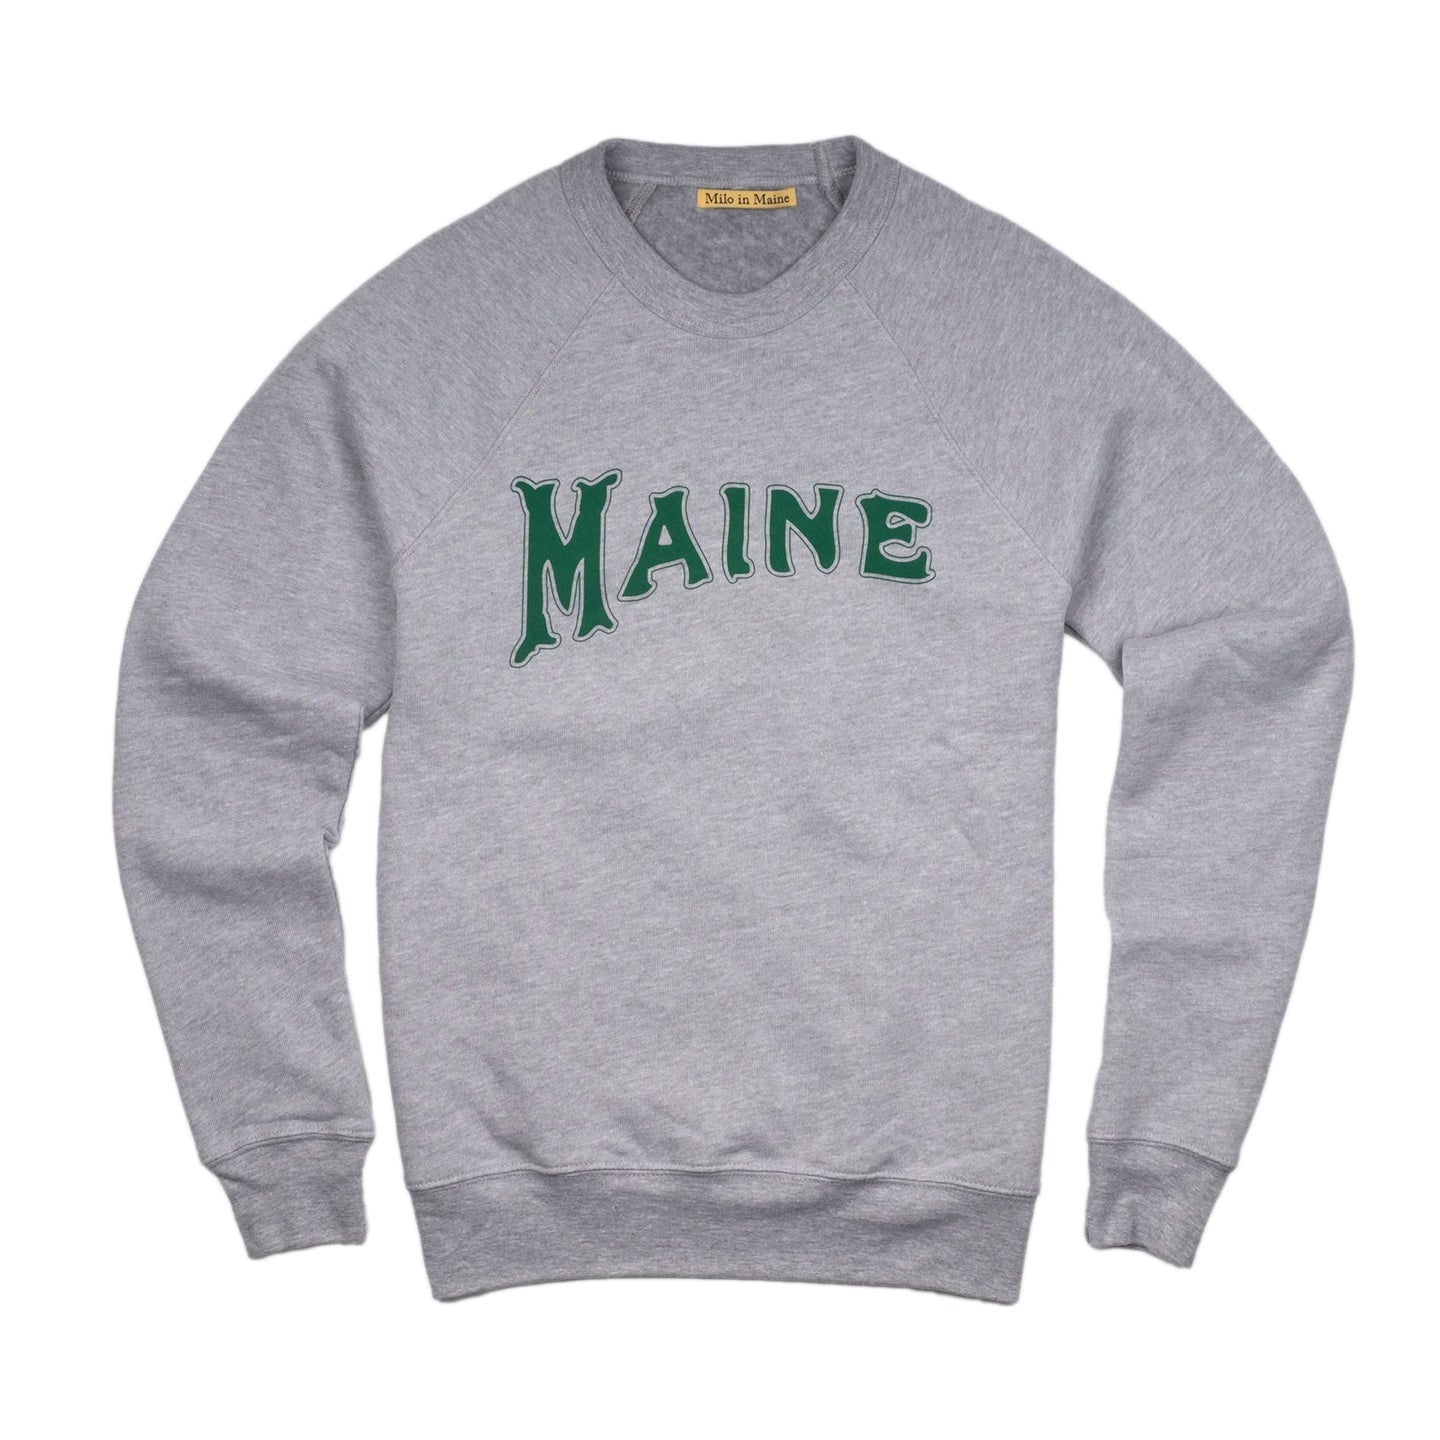 Maine Raglan Sweatshirt (Imperfect)